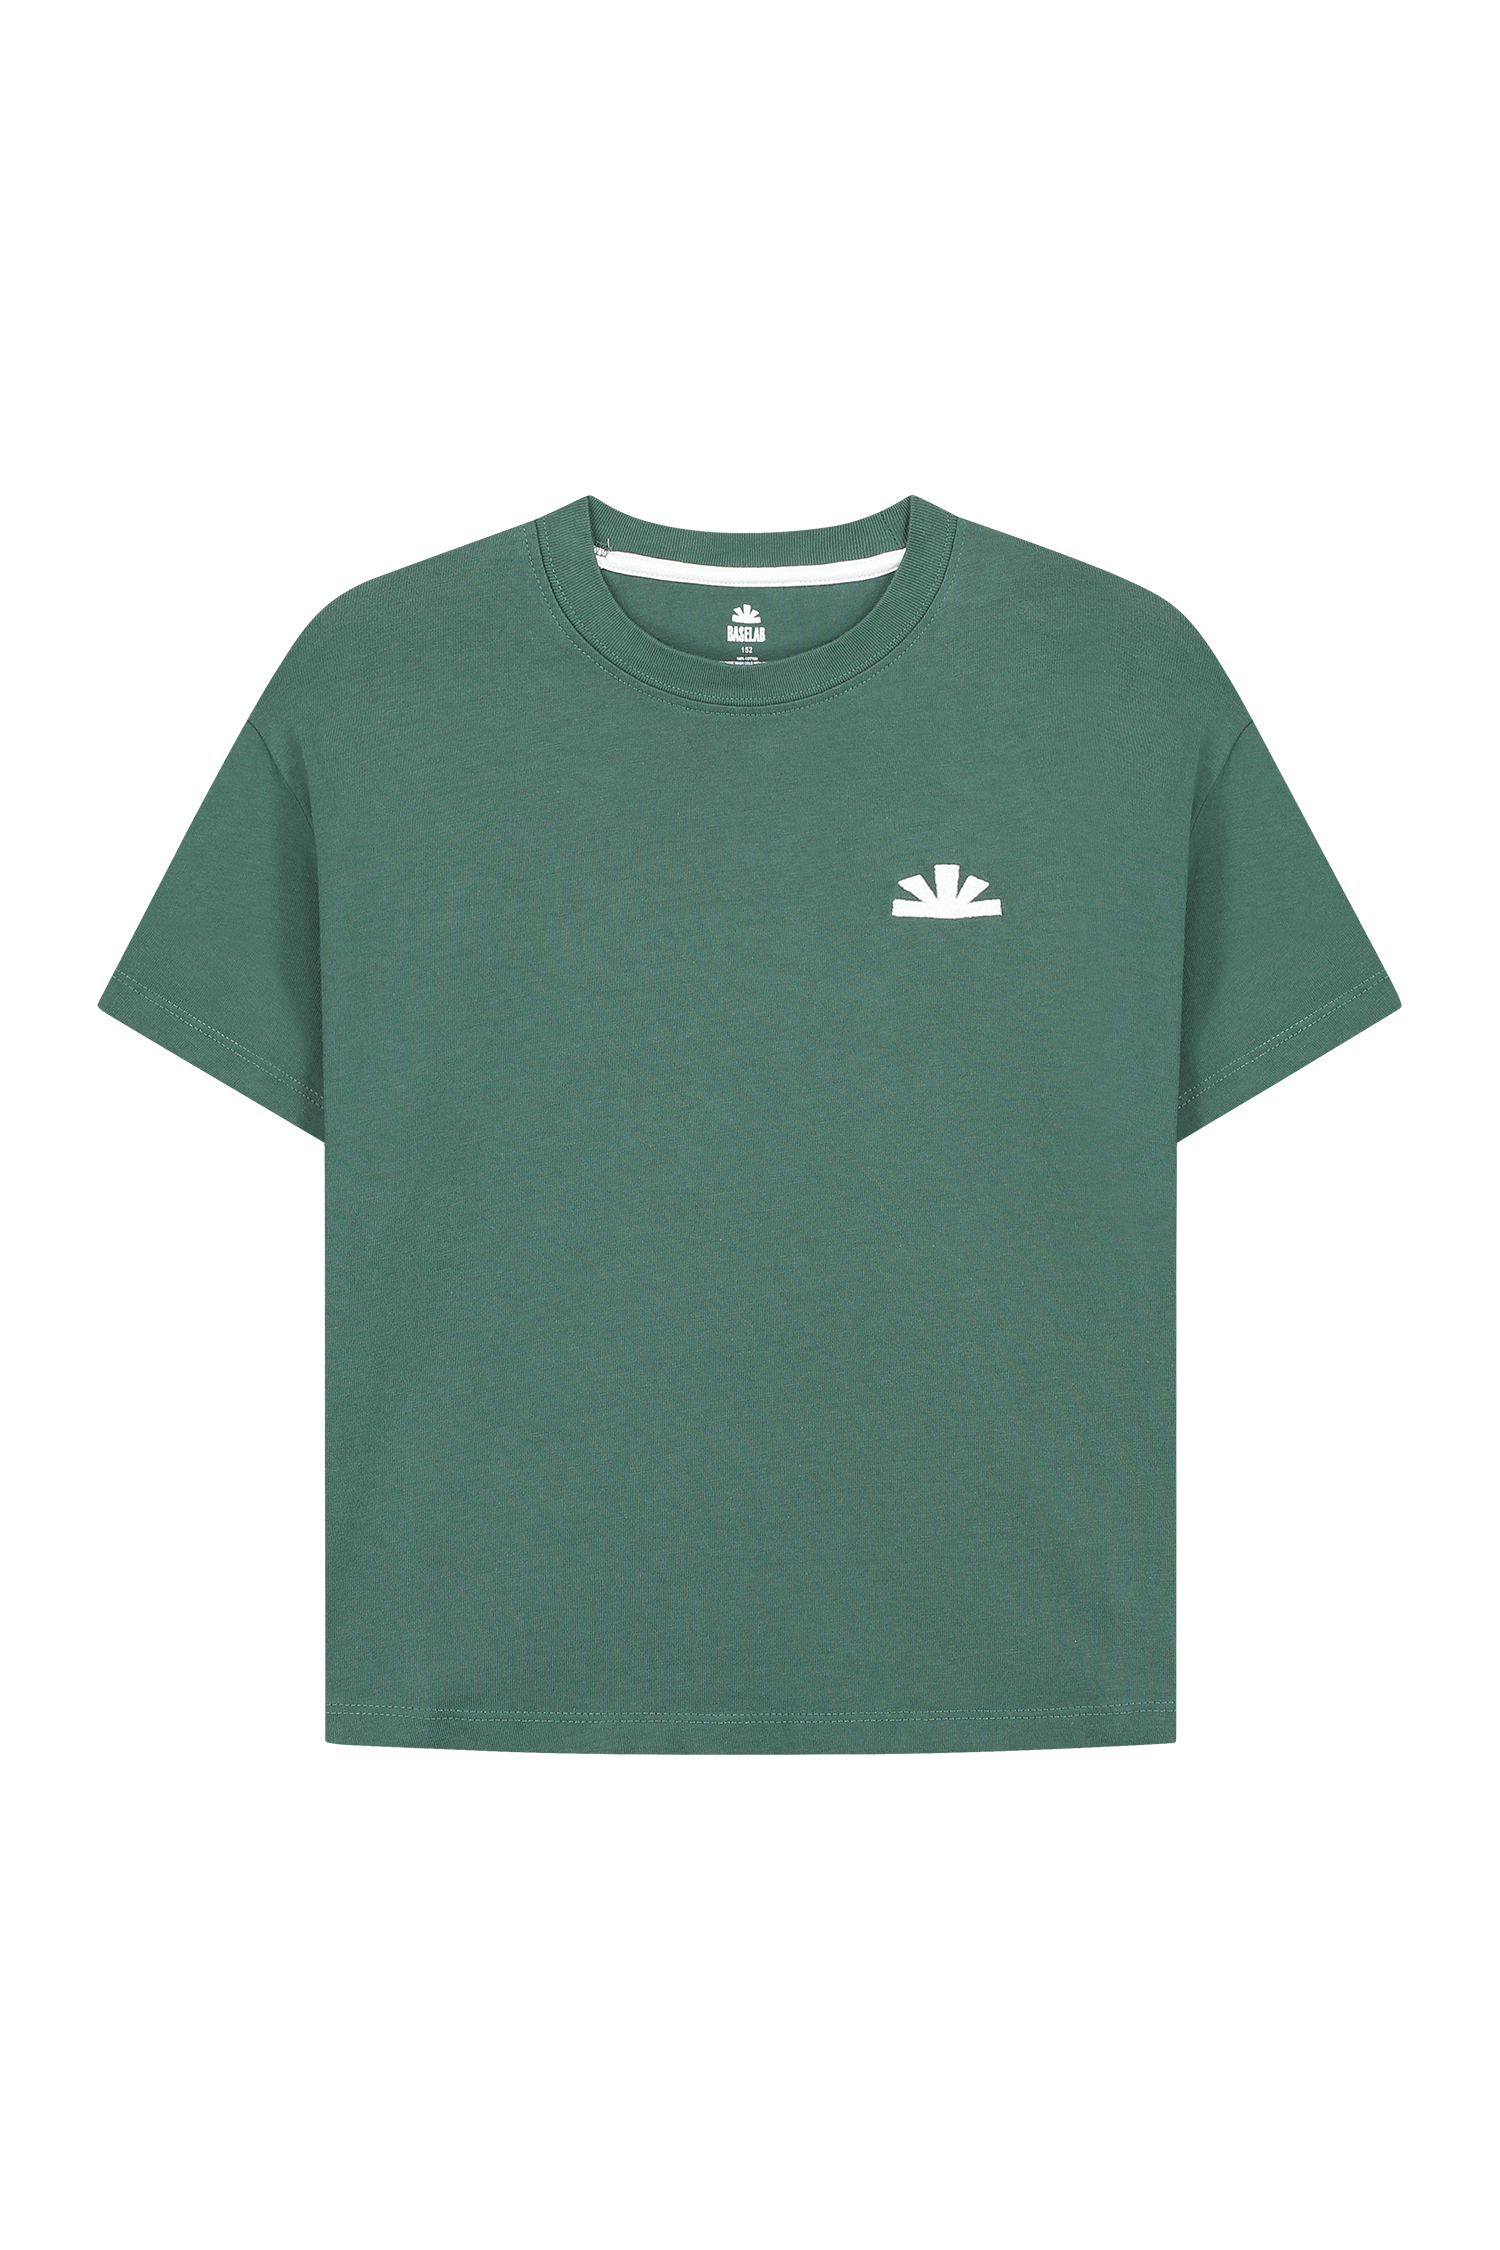 Kinder T-shirt Sunrise groen